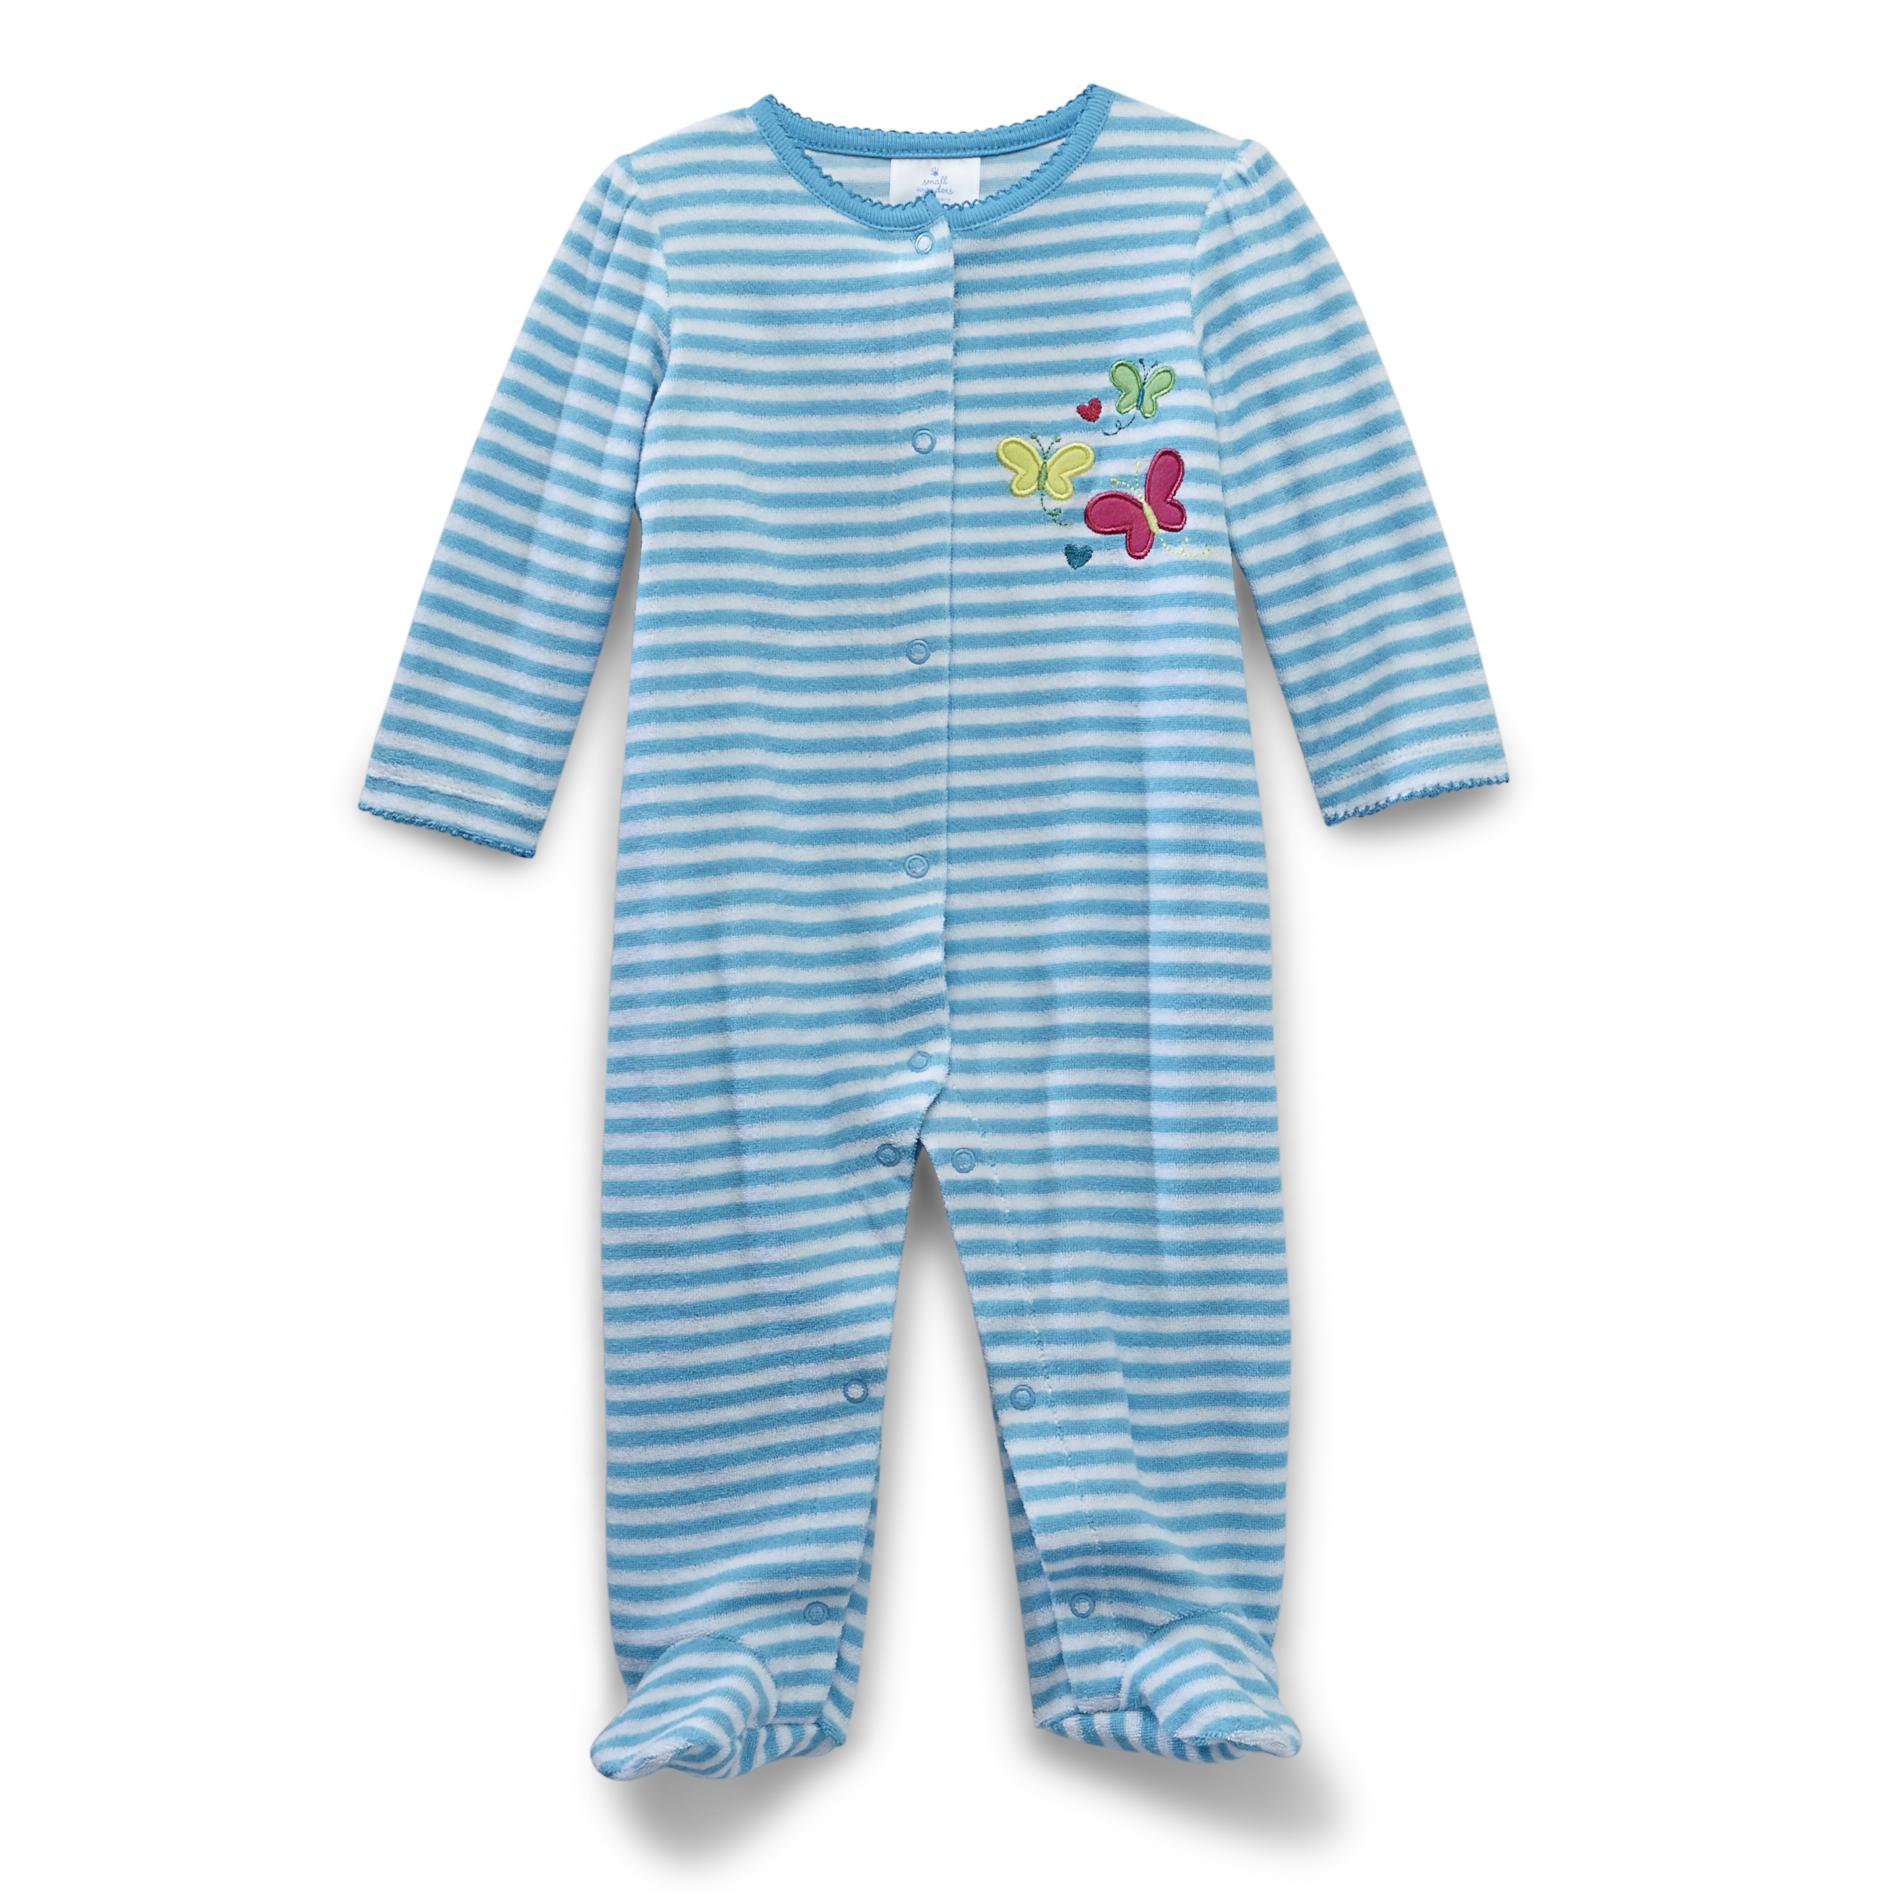 Small Wonders Newborn Girl's Footed Terry Sleeper Pajamas - Butterflies